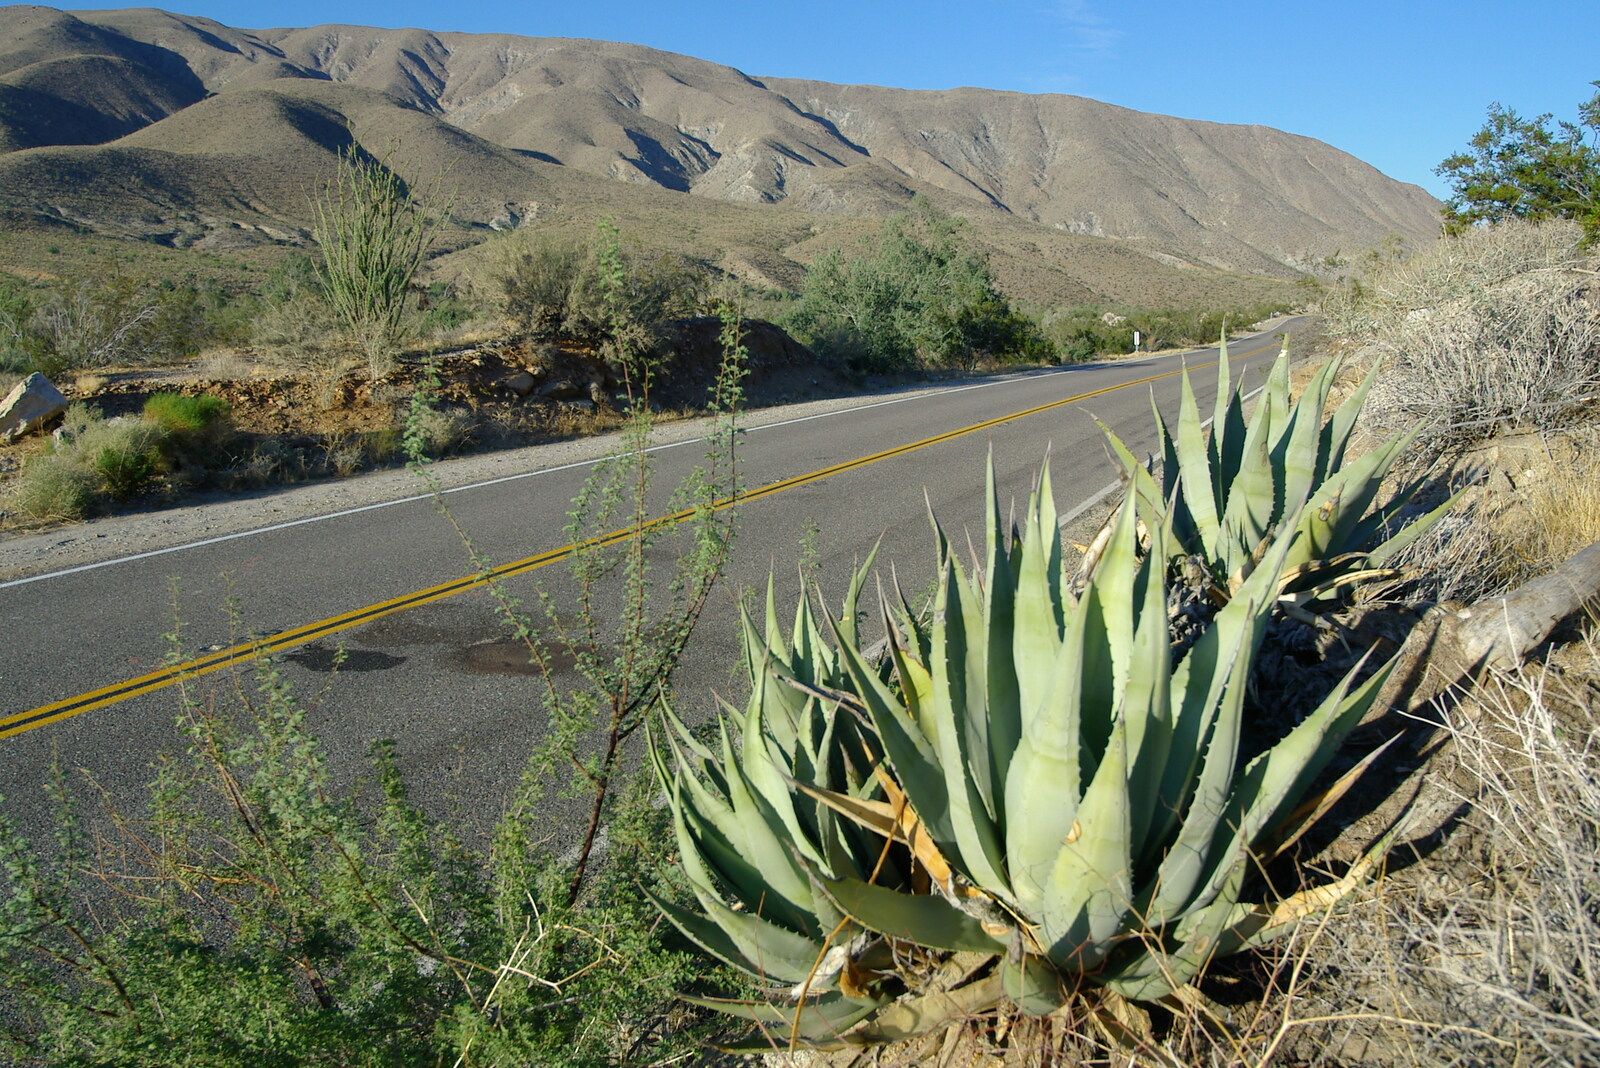 Aloe plants and mountains, Route 78 from California Desert 2: The Salton Sea and Anza-Borrego to Julian, California, US - 24th September 2005